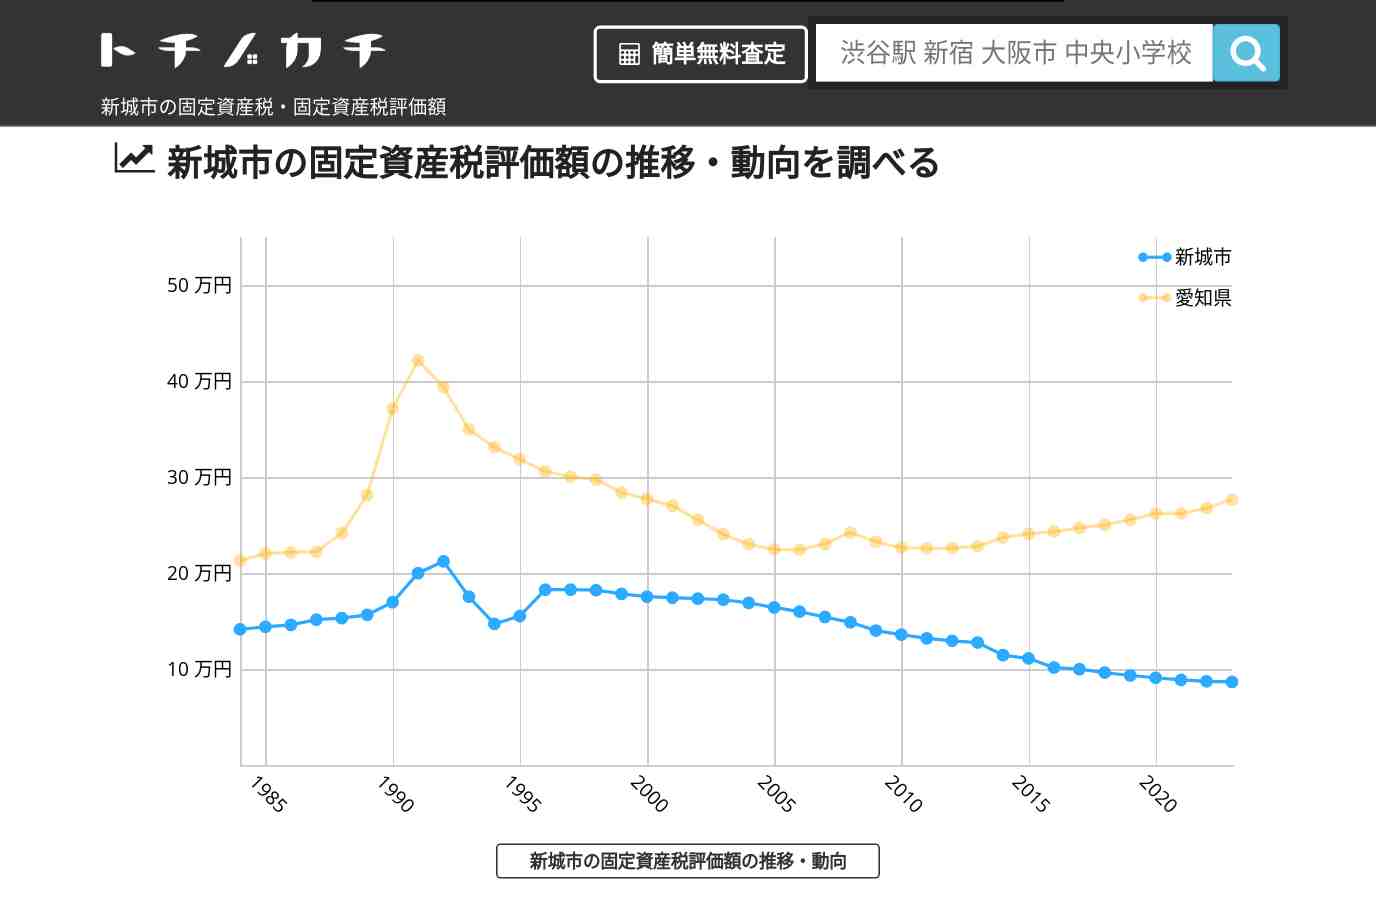 舟着小学校(愛知県 新城市)周辺の固定資産税・固定資産税評価額 | トチノカチ